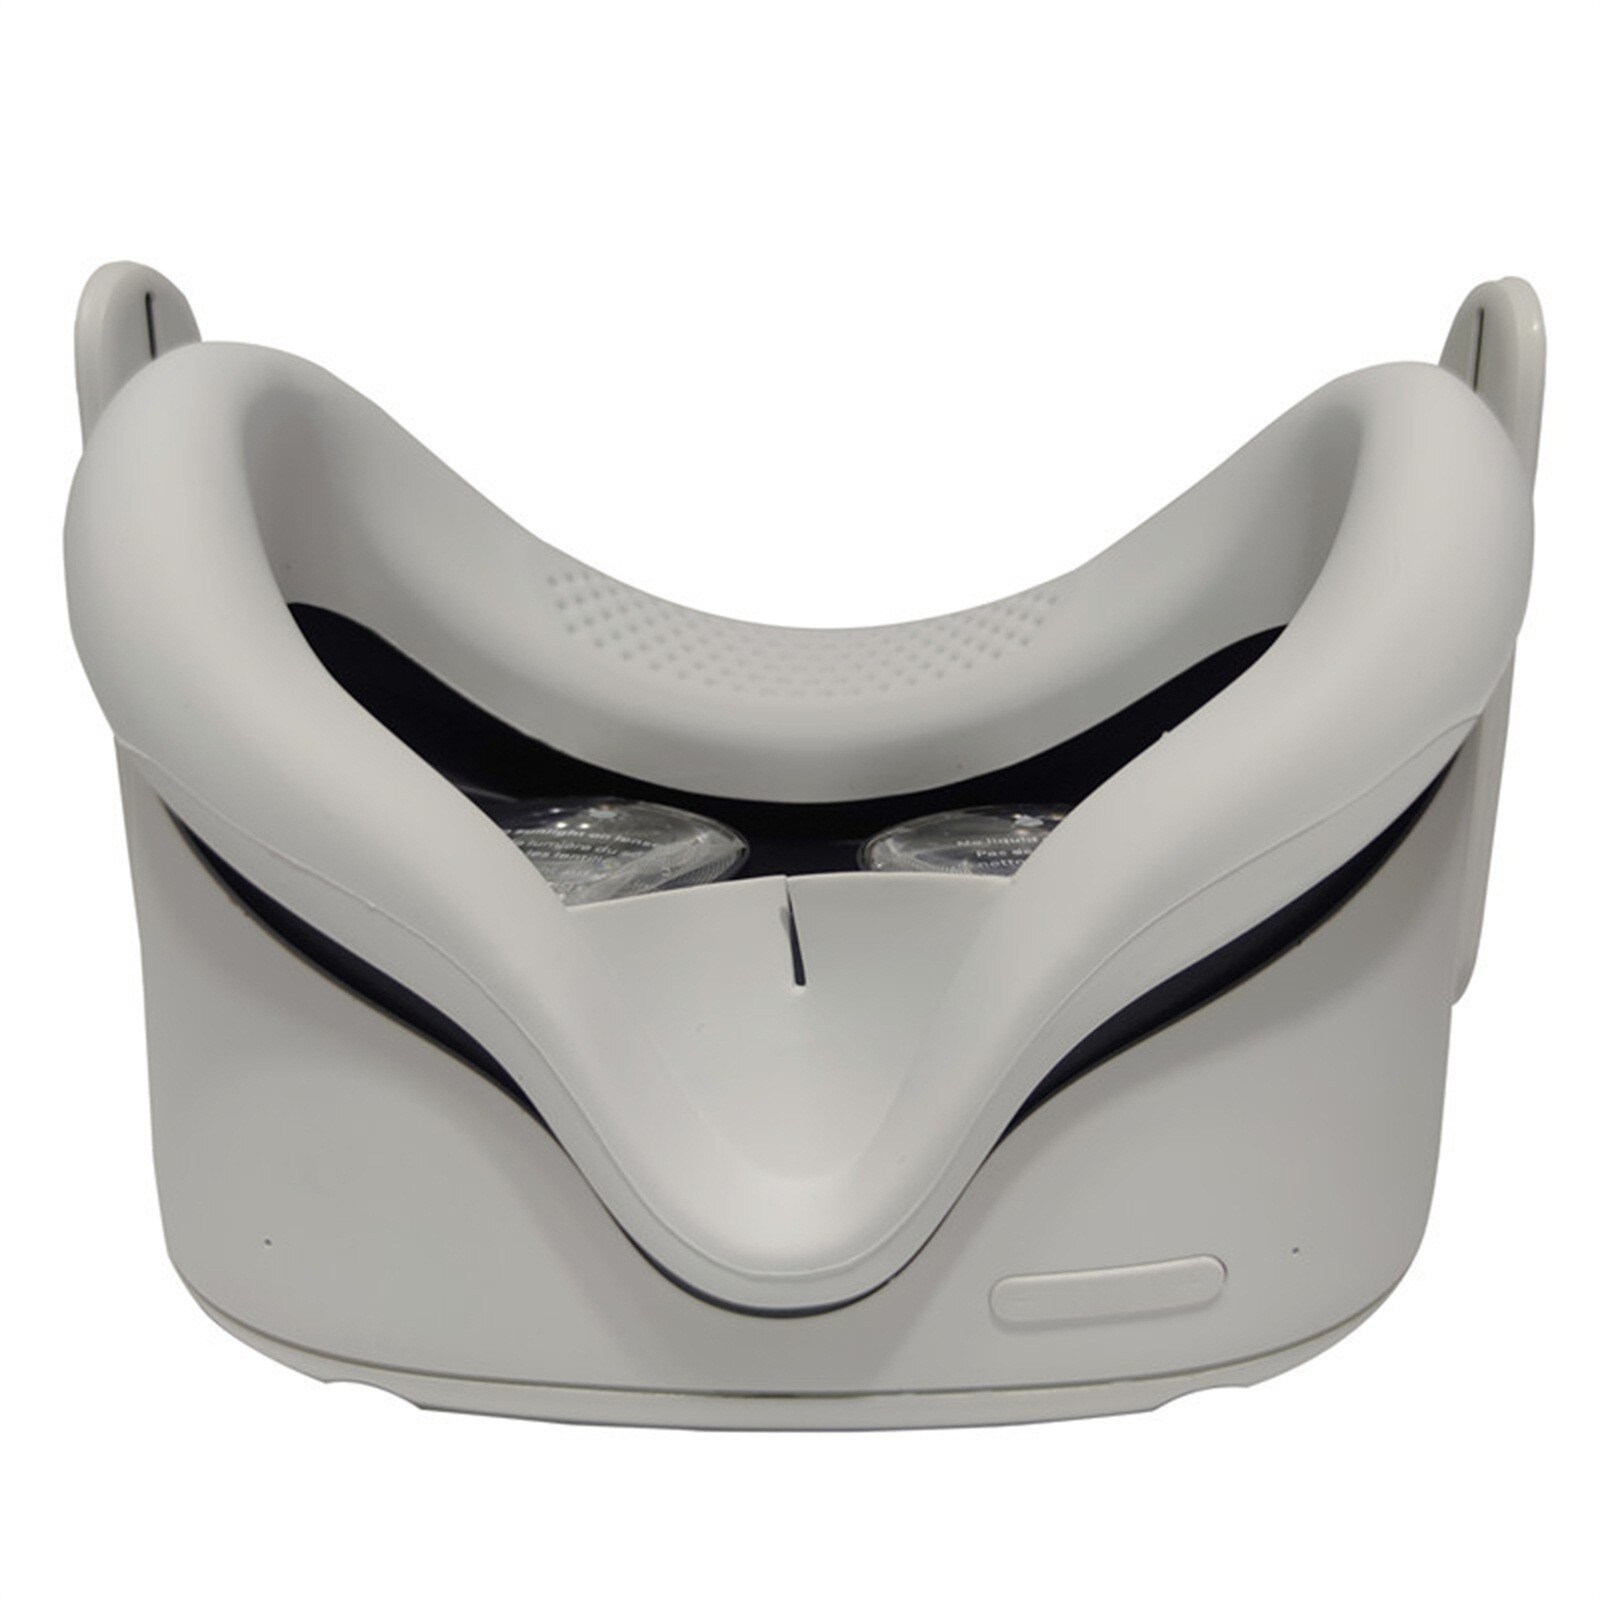 Siliconen Eye Cover Case Vervanging Oogmasker Pad Cover Voor Oculus Quest 2 Vr/Ar Glazen Accessoires